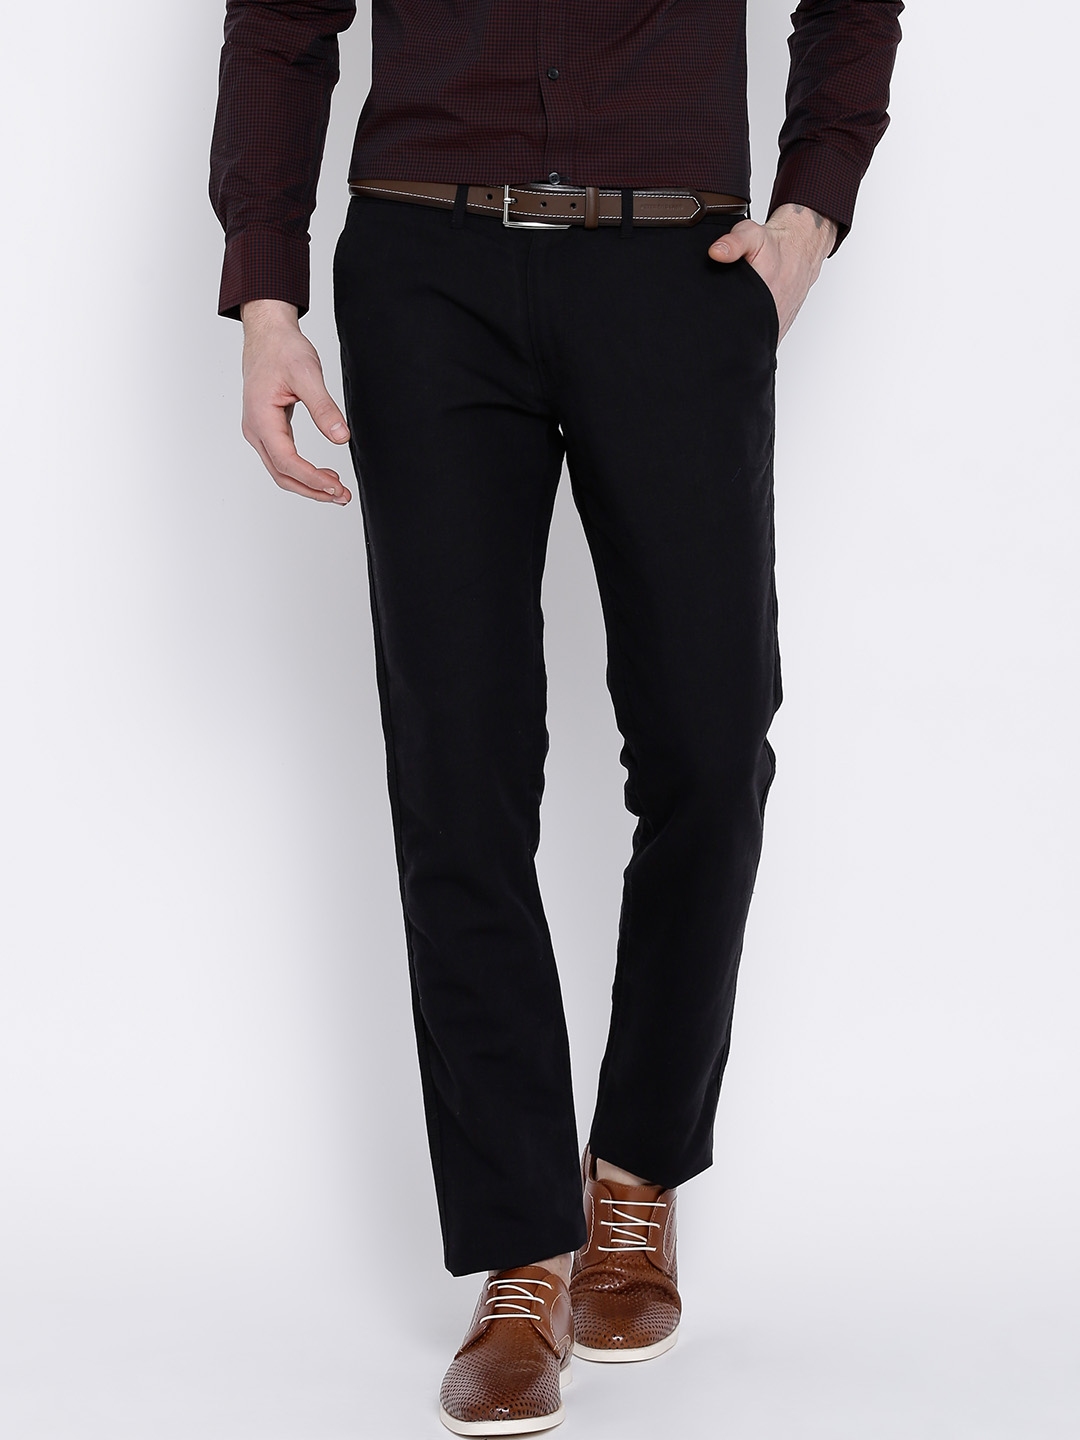 Buy Celio Black Slim Fit Trousers - Trousers for Men 1091099 | Myntra